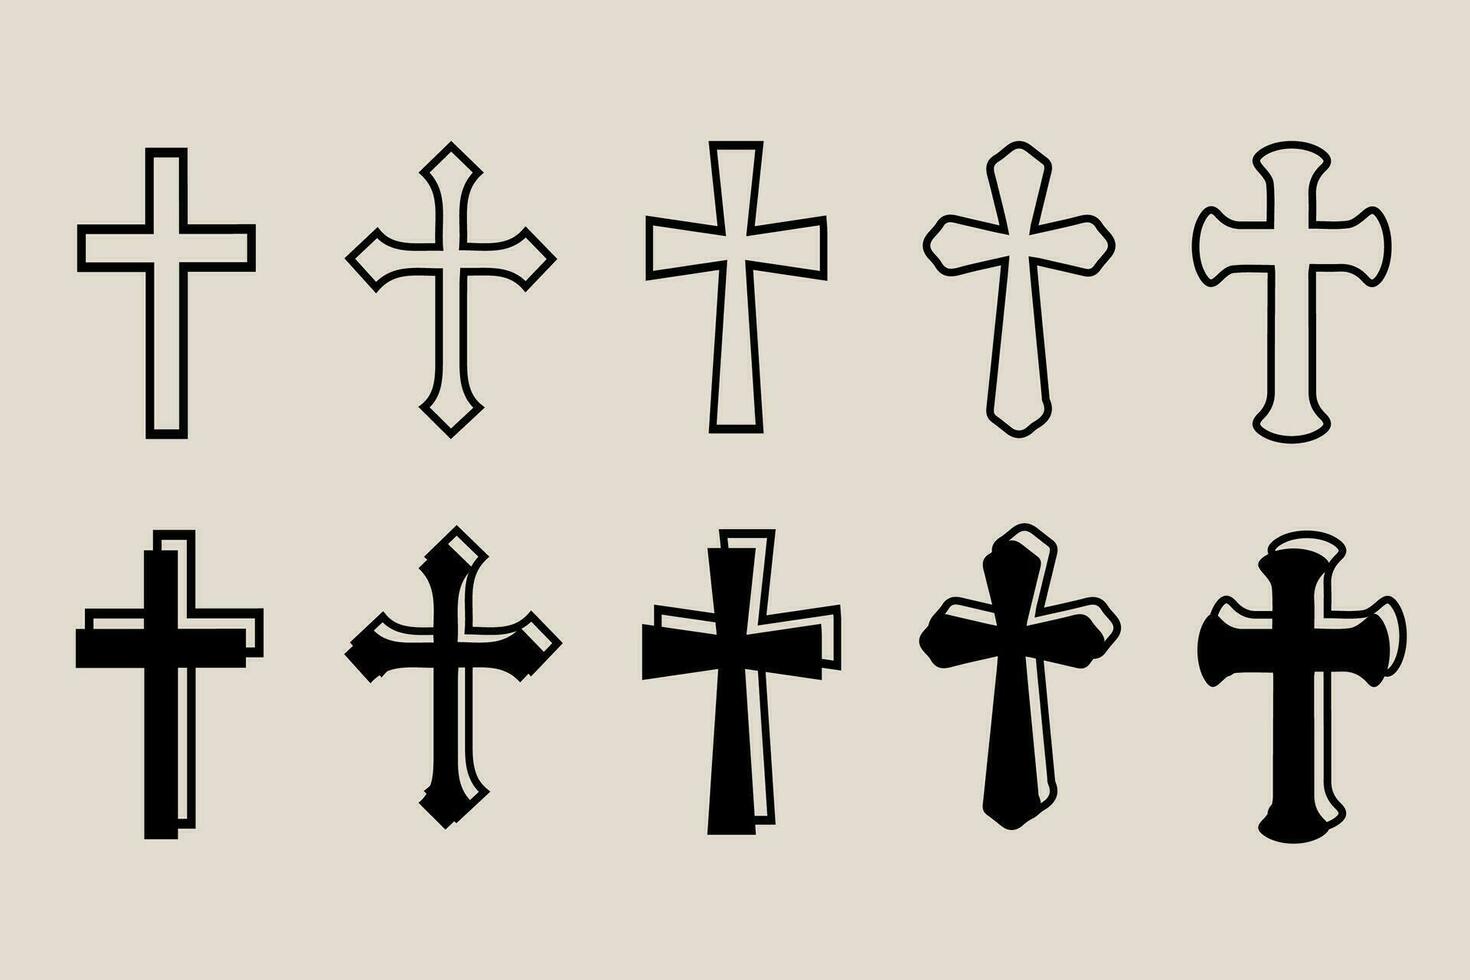 decorativo crucifijo religión católico símbolo, cristiano cruces ortodoxo fe Iglesia cruzar íconos diseño, aislado plano colocar. vector ilustración.